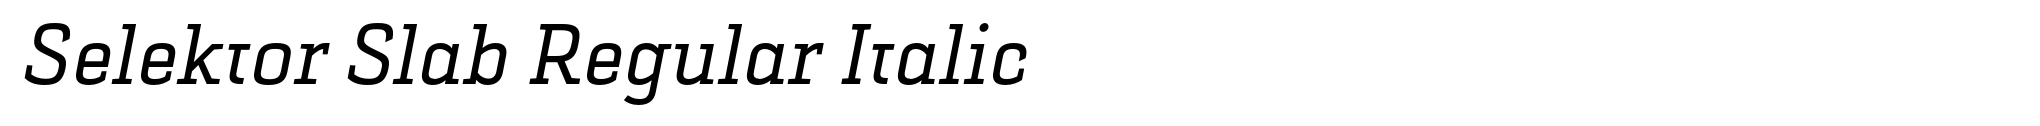 Selektor Slab Regular Italic image